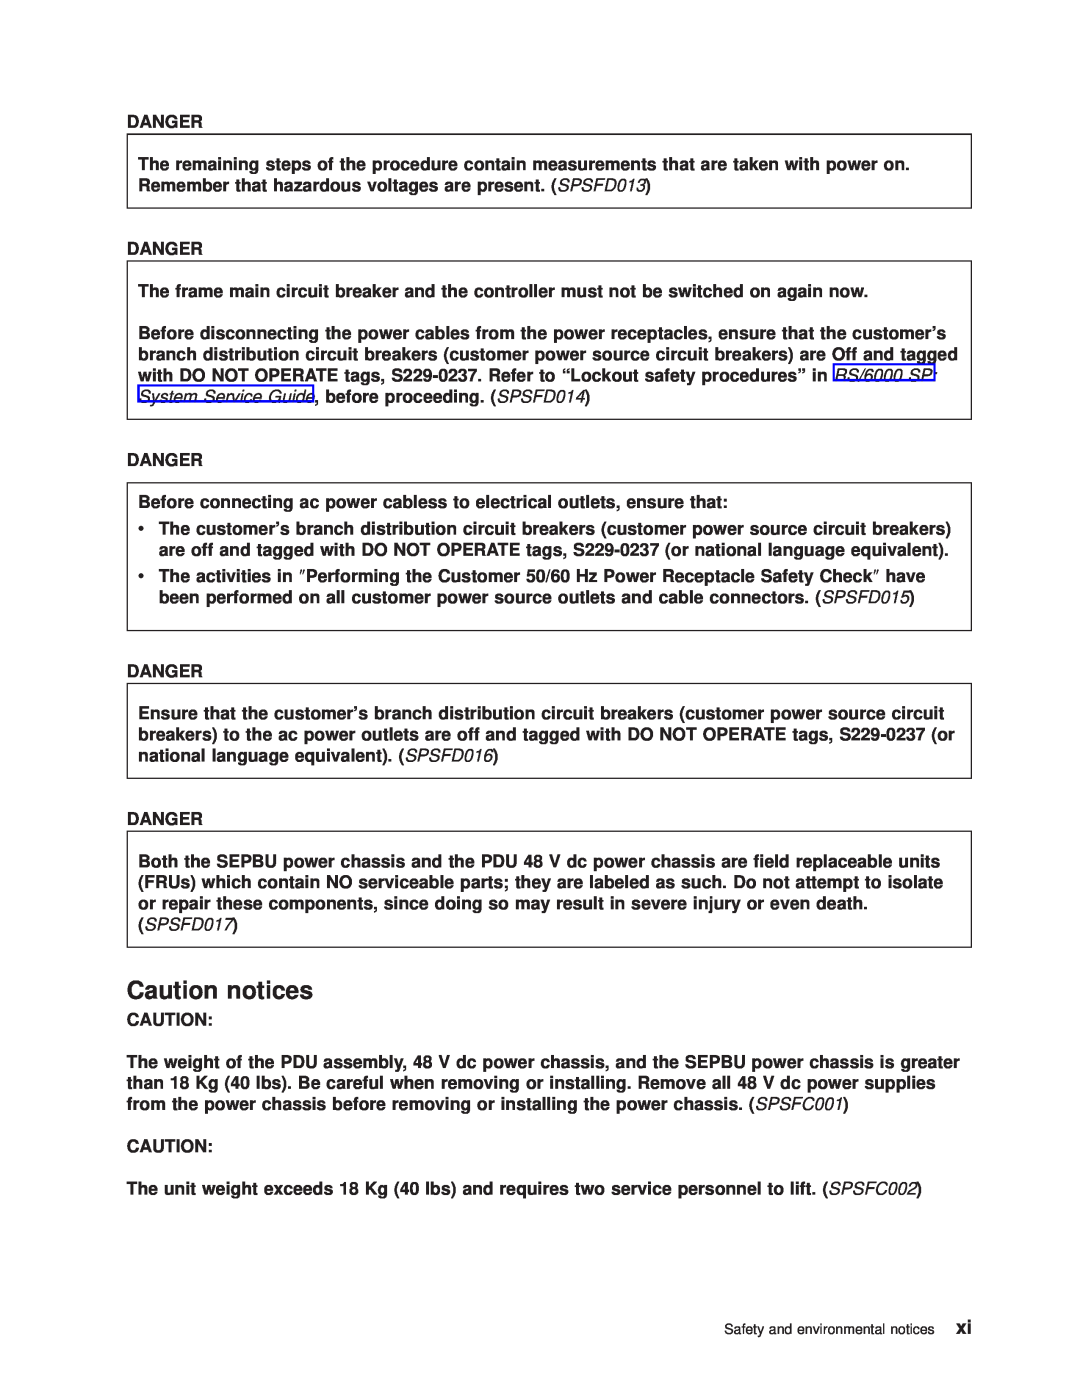 IBM RS/6000 SP manual Caution notices, SPSFD017 